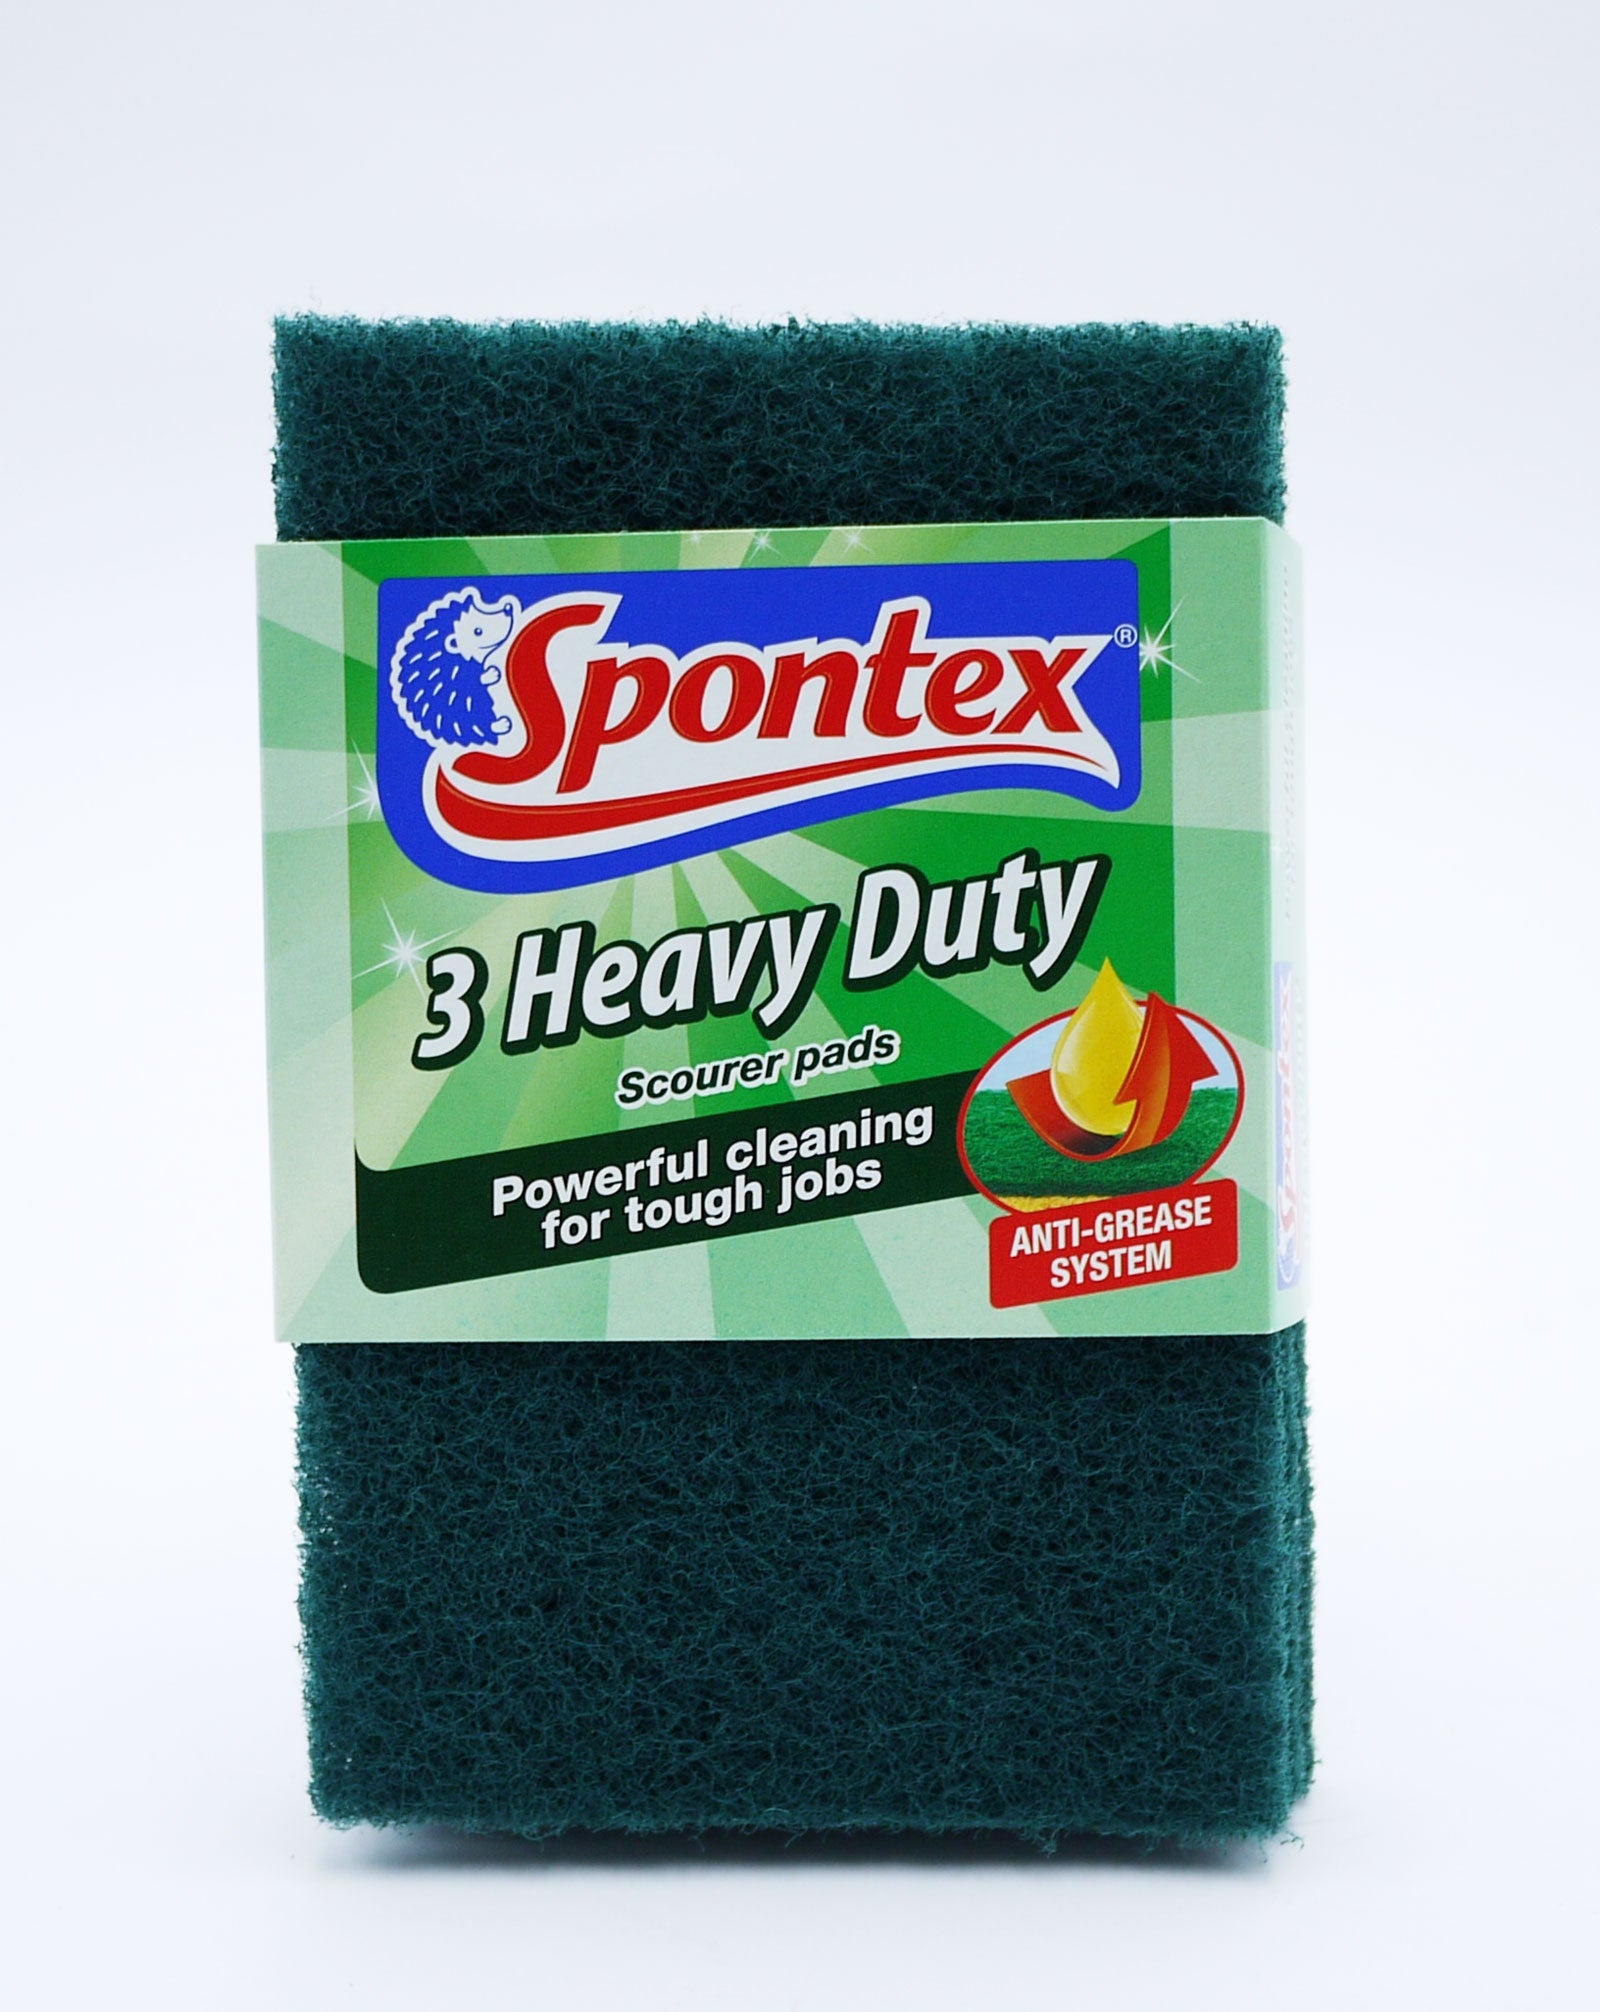 Spontex Heavy Duty Scourer Pads (3 pack)*